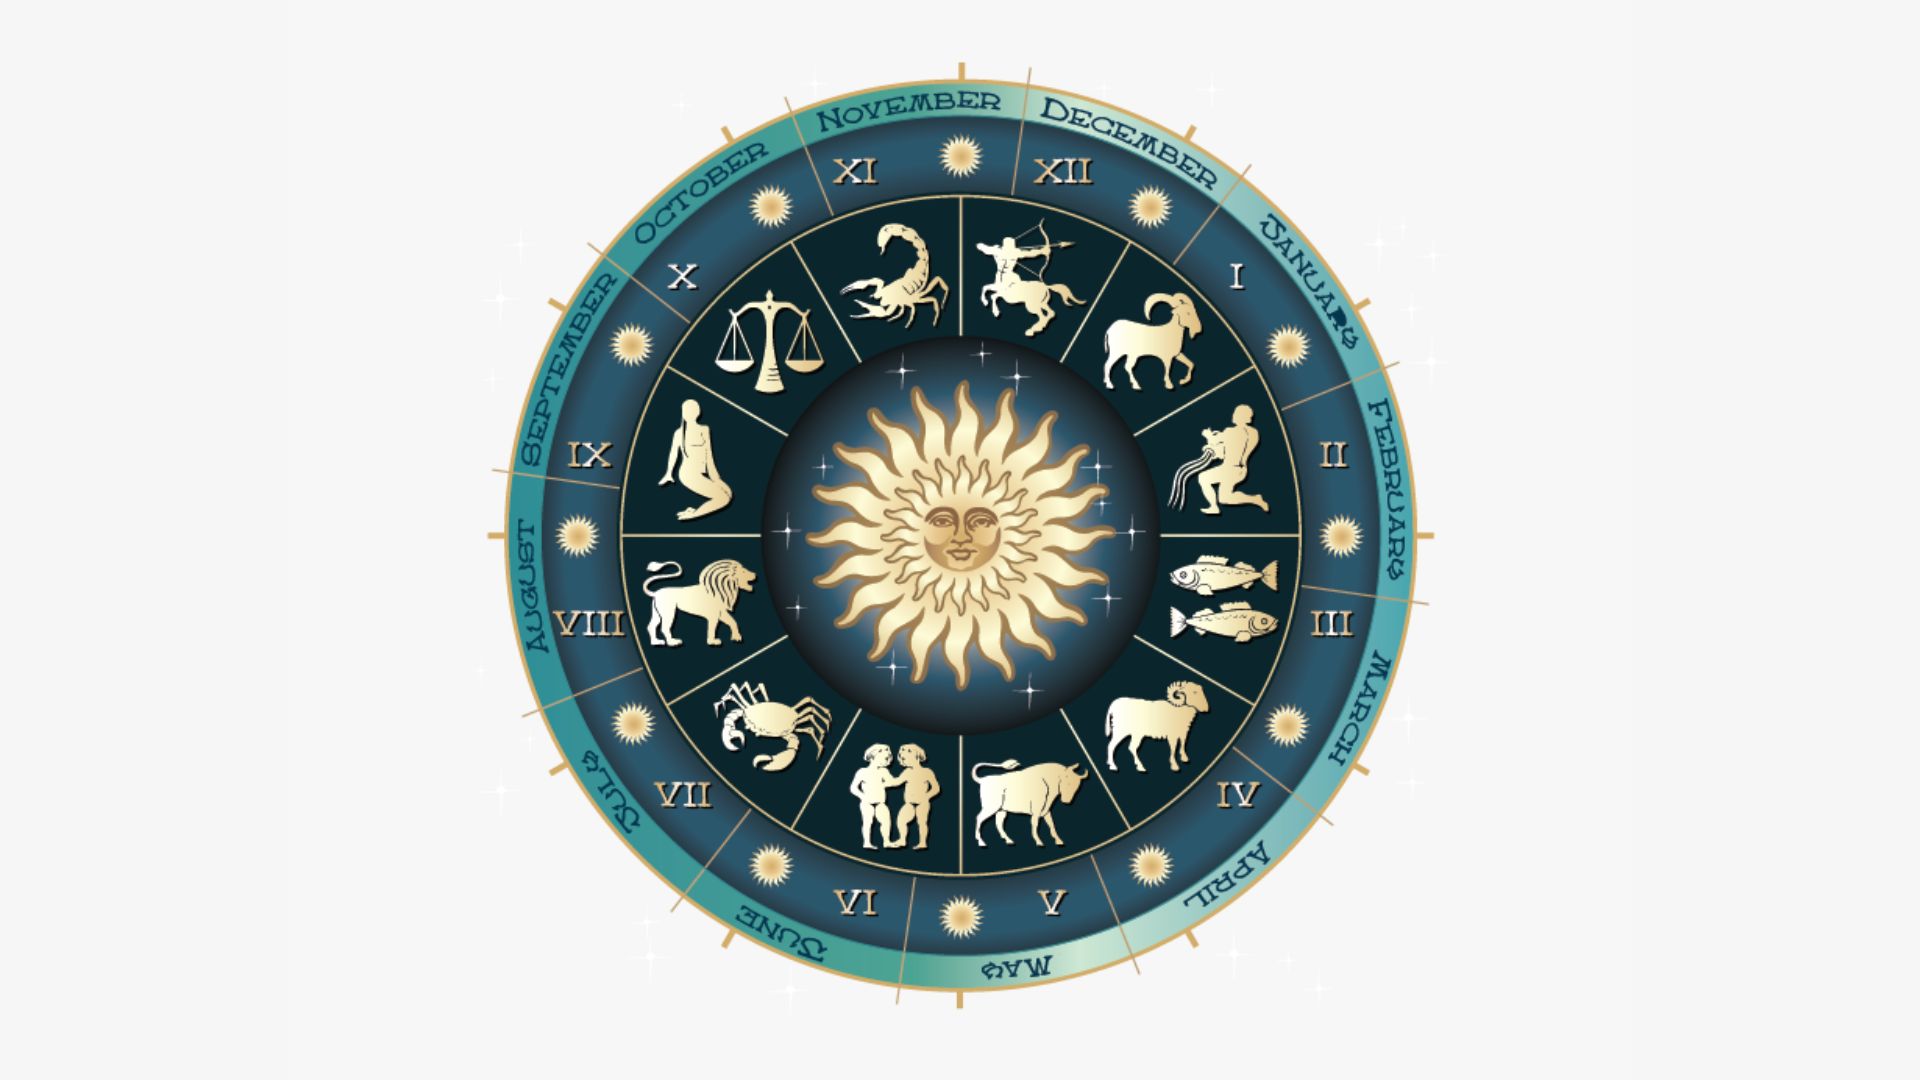 Zodiac Sign And Symbols Around Sun